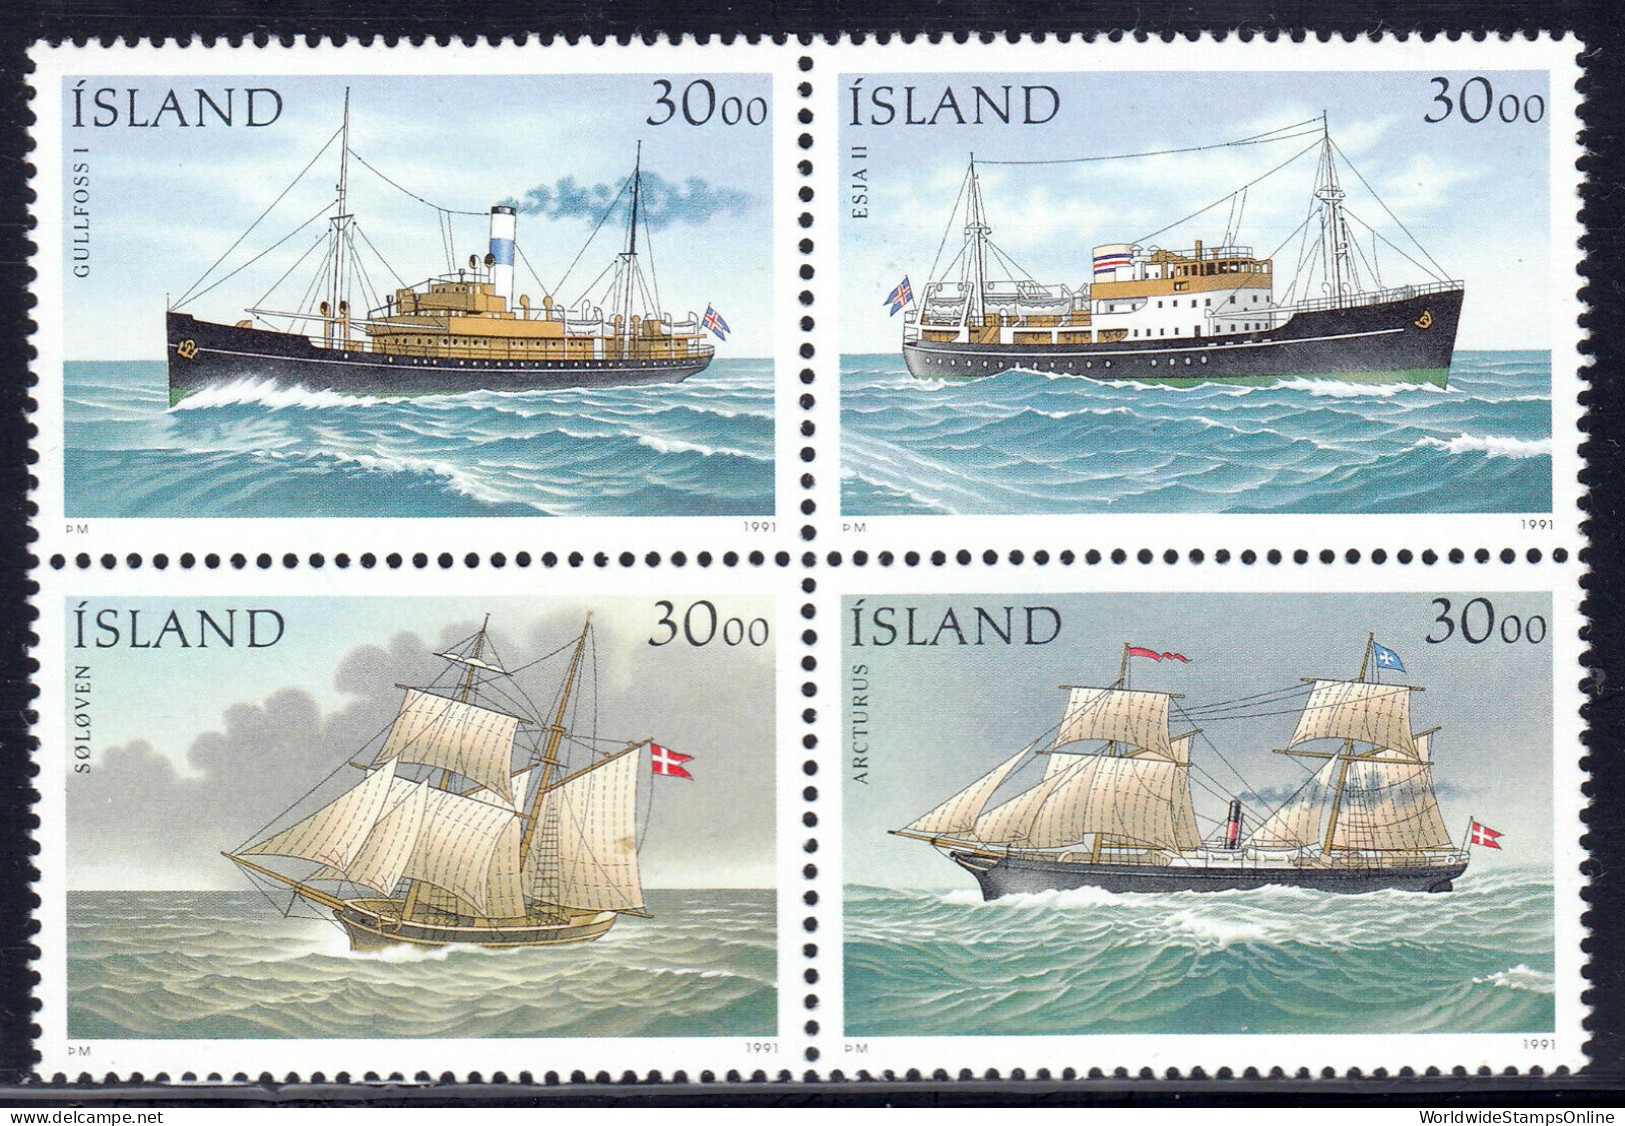 ICELAND — SCOTT 745 — 1991 SHIPS SE-TENANT SET — MNH — SCV $20 - Lettres & Documents